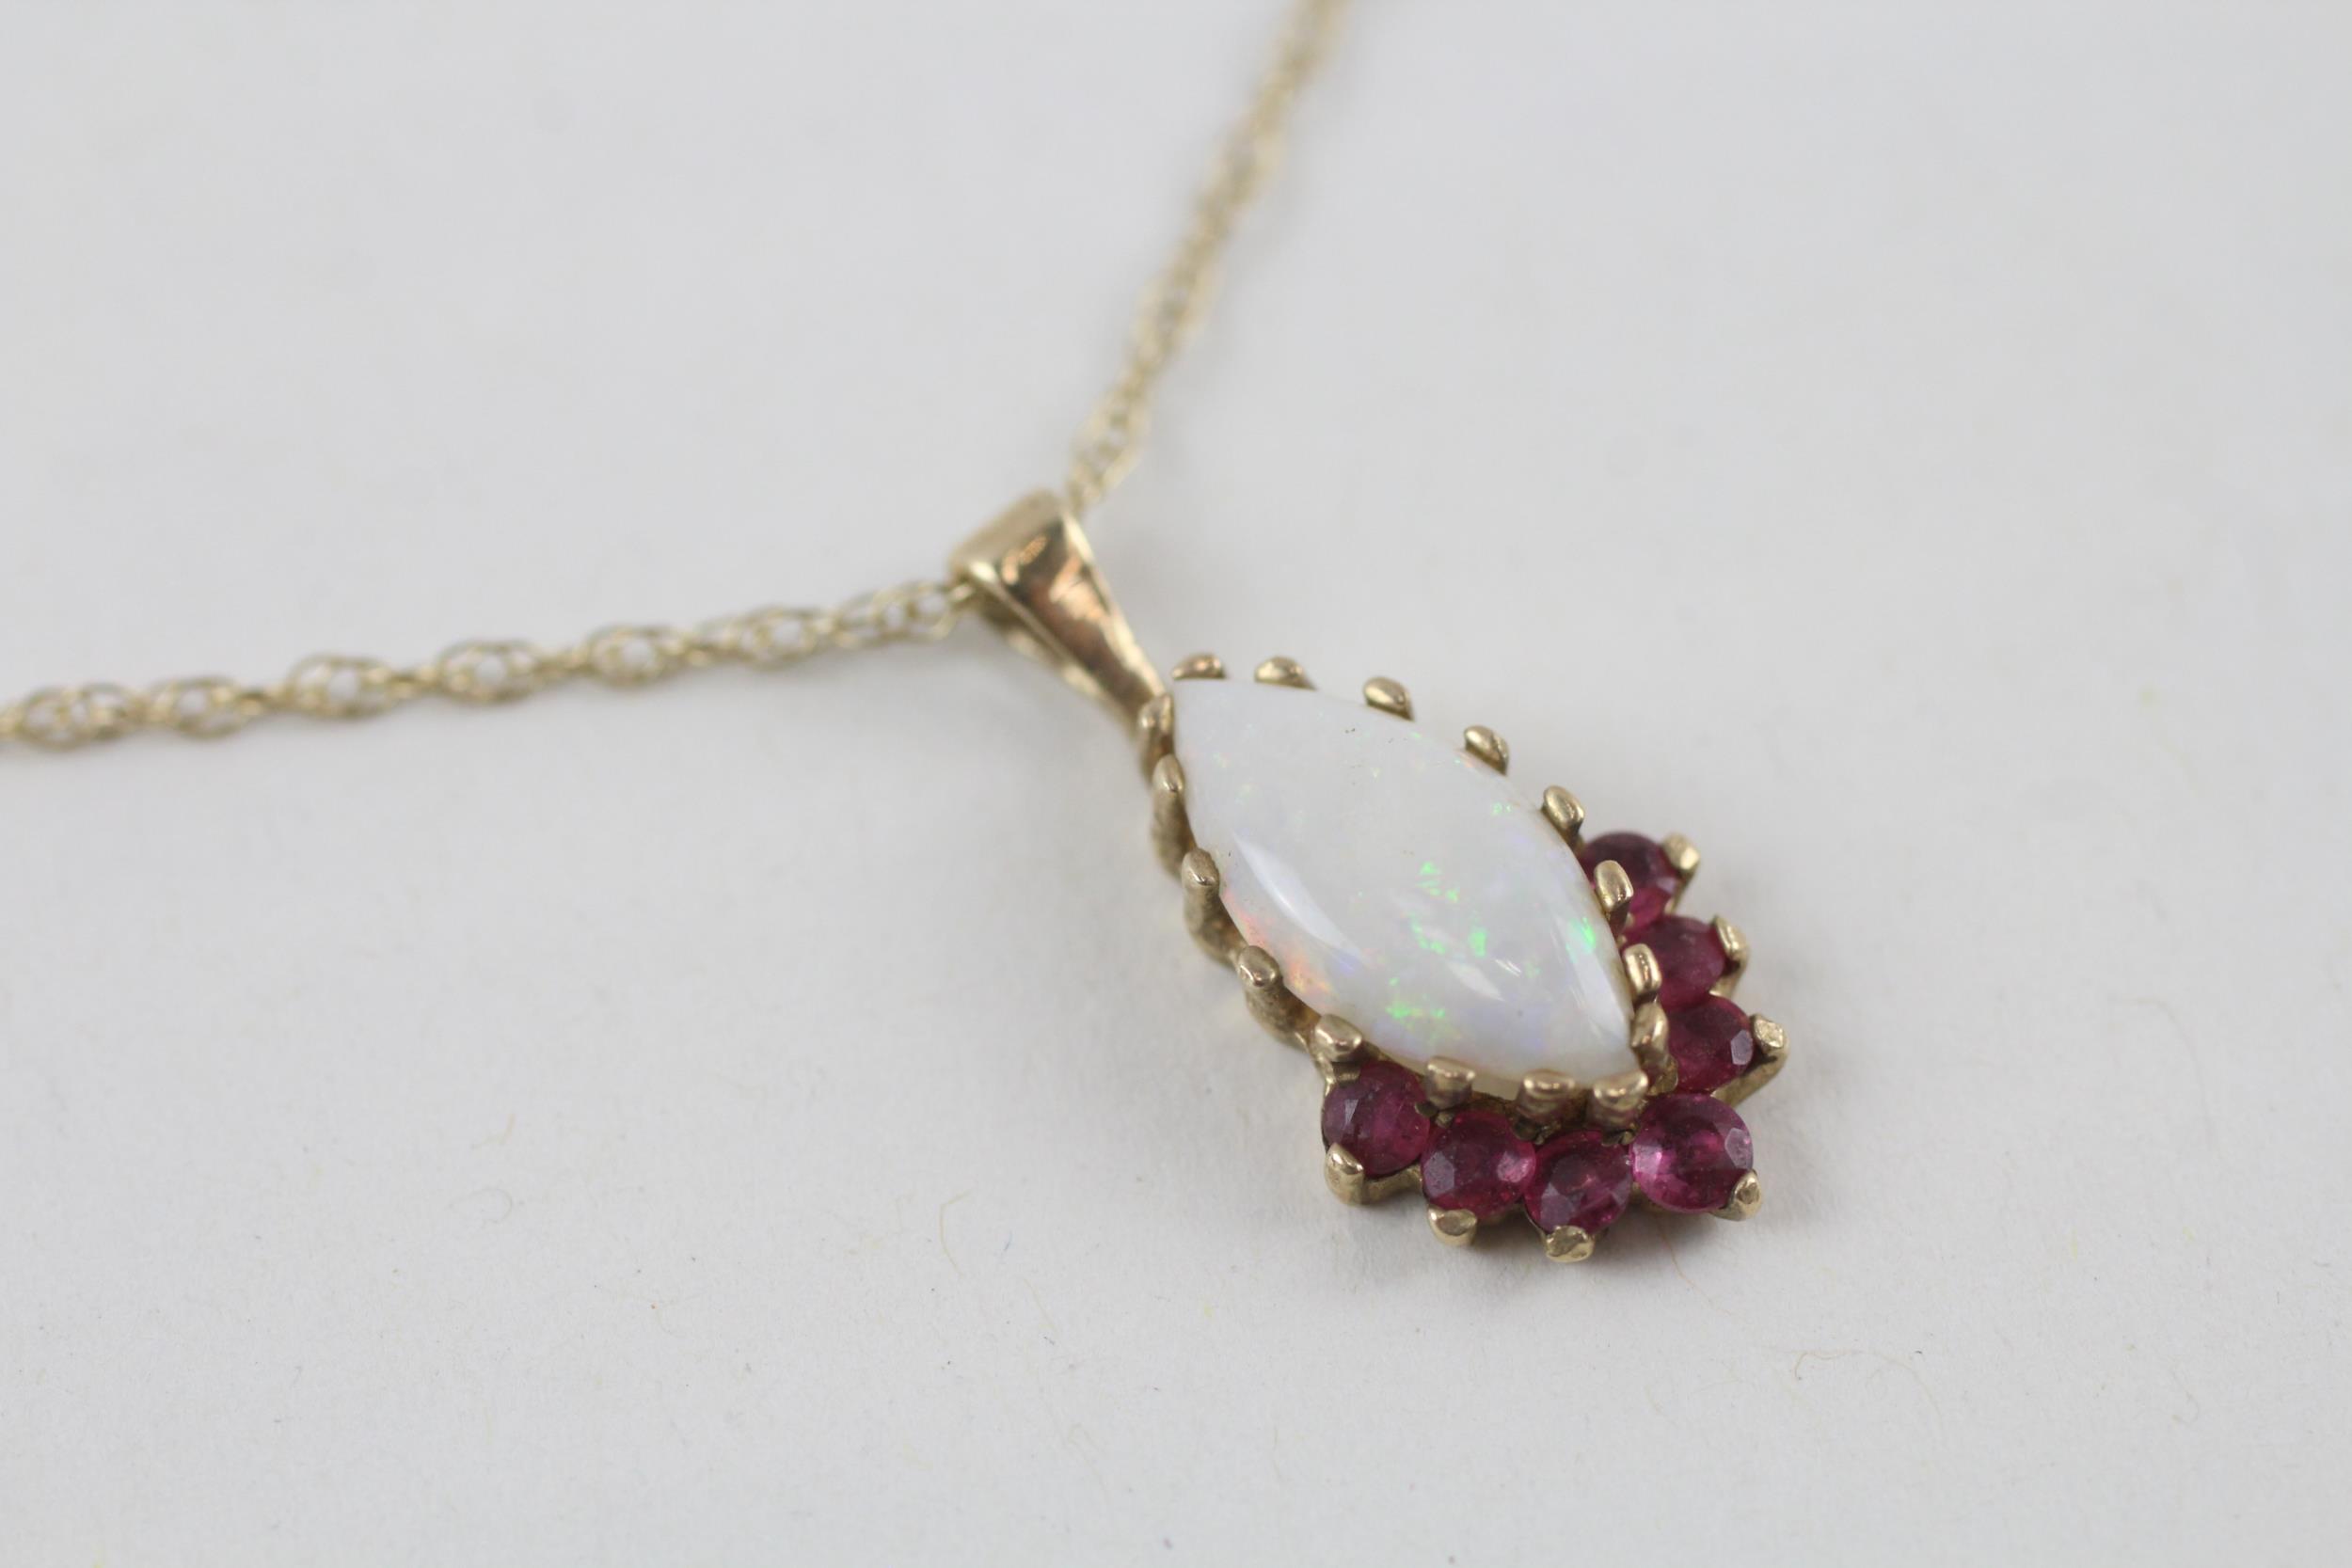 9ct gold vintage opal & ruby pendant necklace (1.7g)